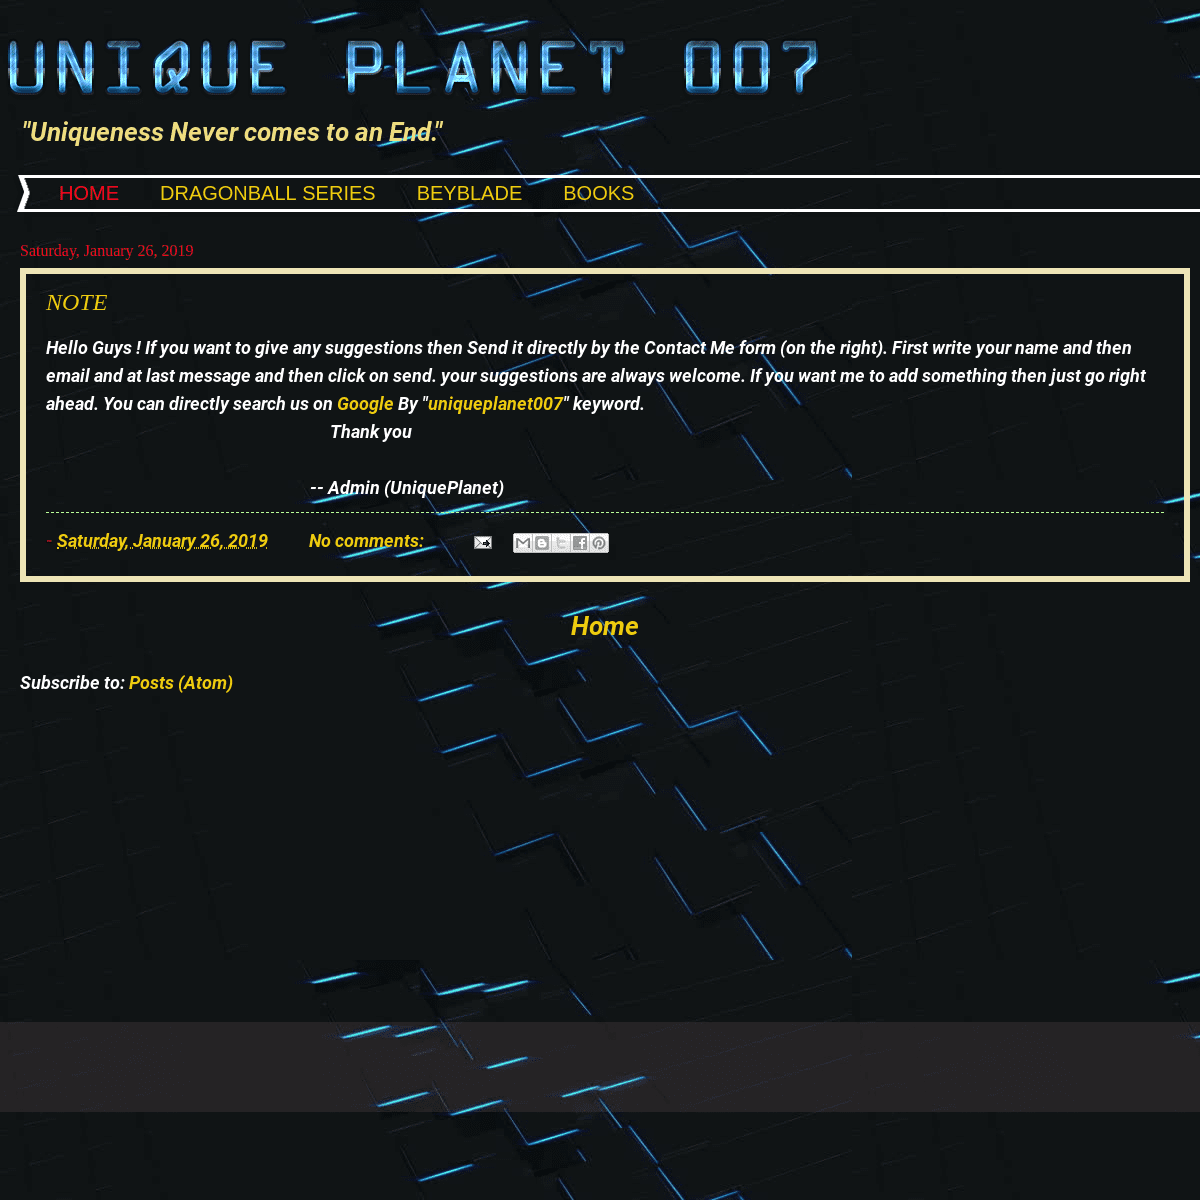 A complete backup of uniqueplanet007.blogspot.com